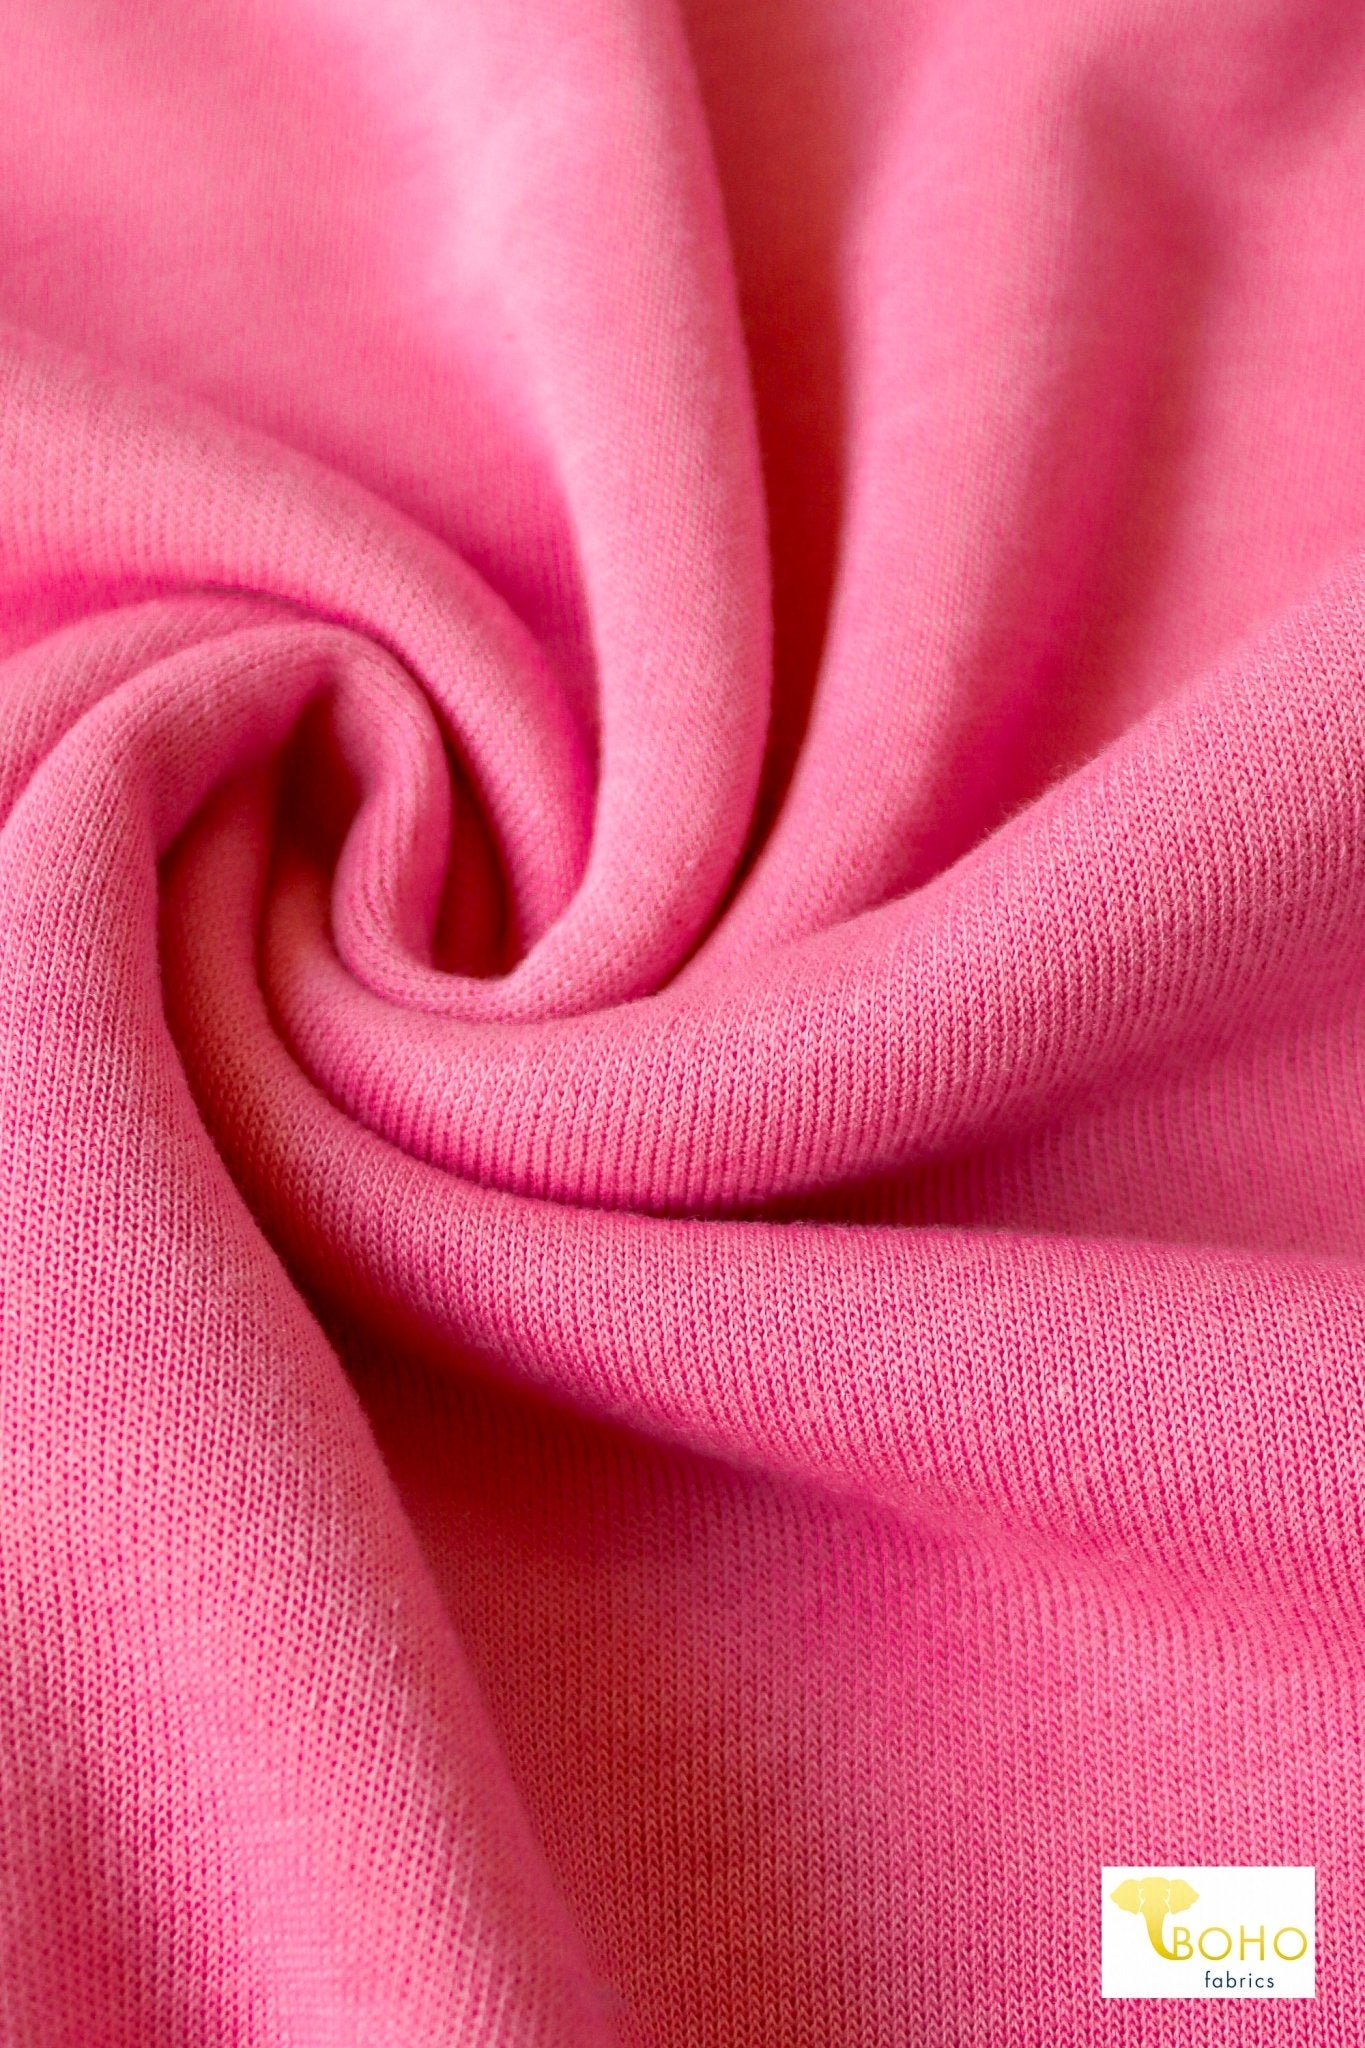 Cotton Candy Pink, Sweatshirt Fleece. - Boho Fabrics